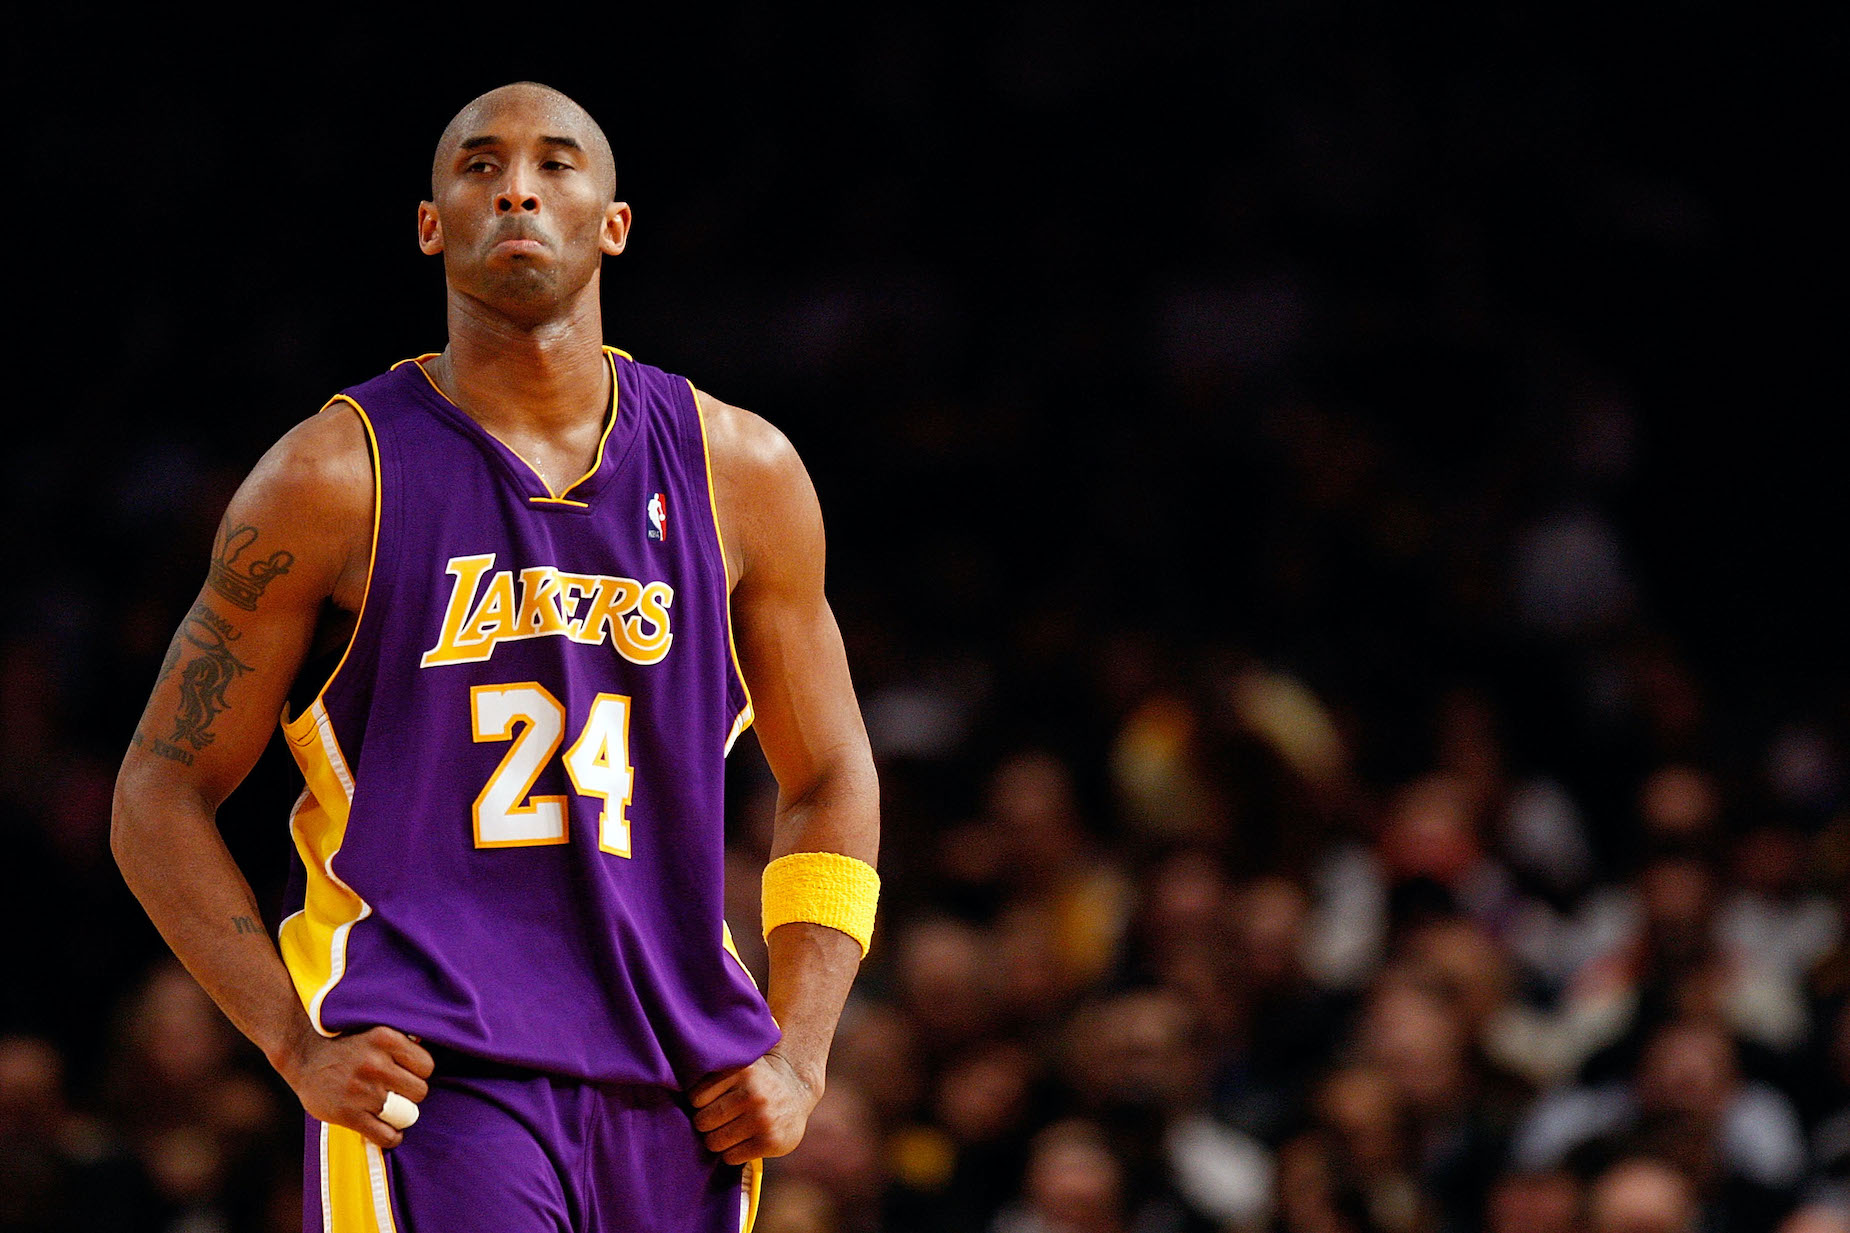 LA Lakers star Kobe Bryant walks down the court